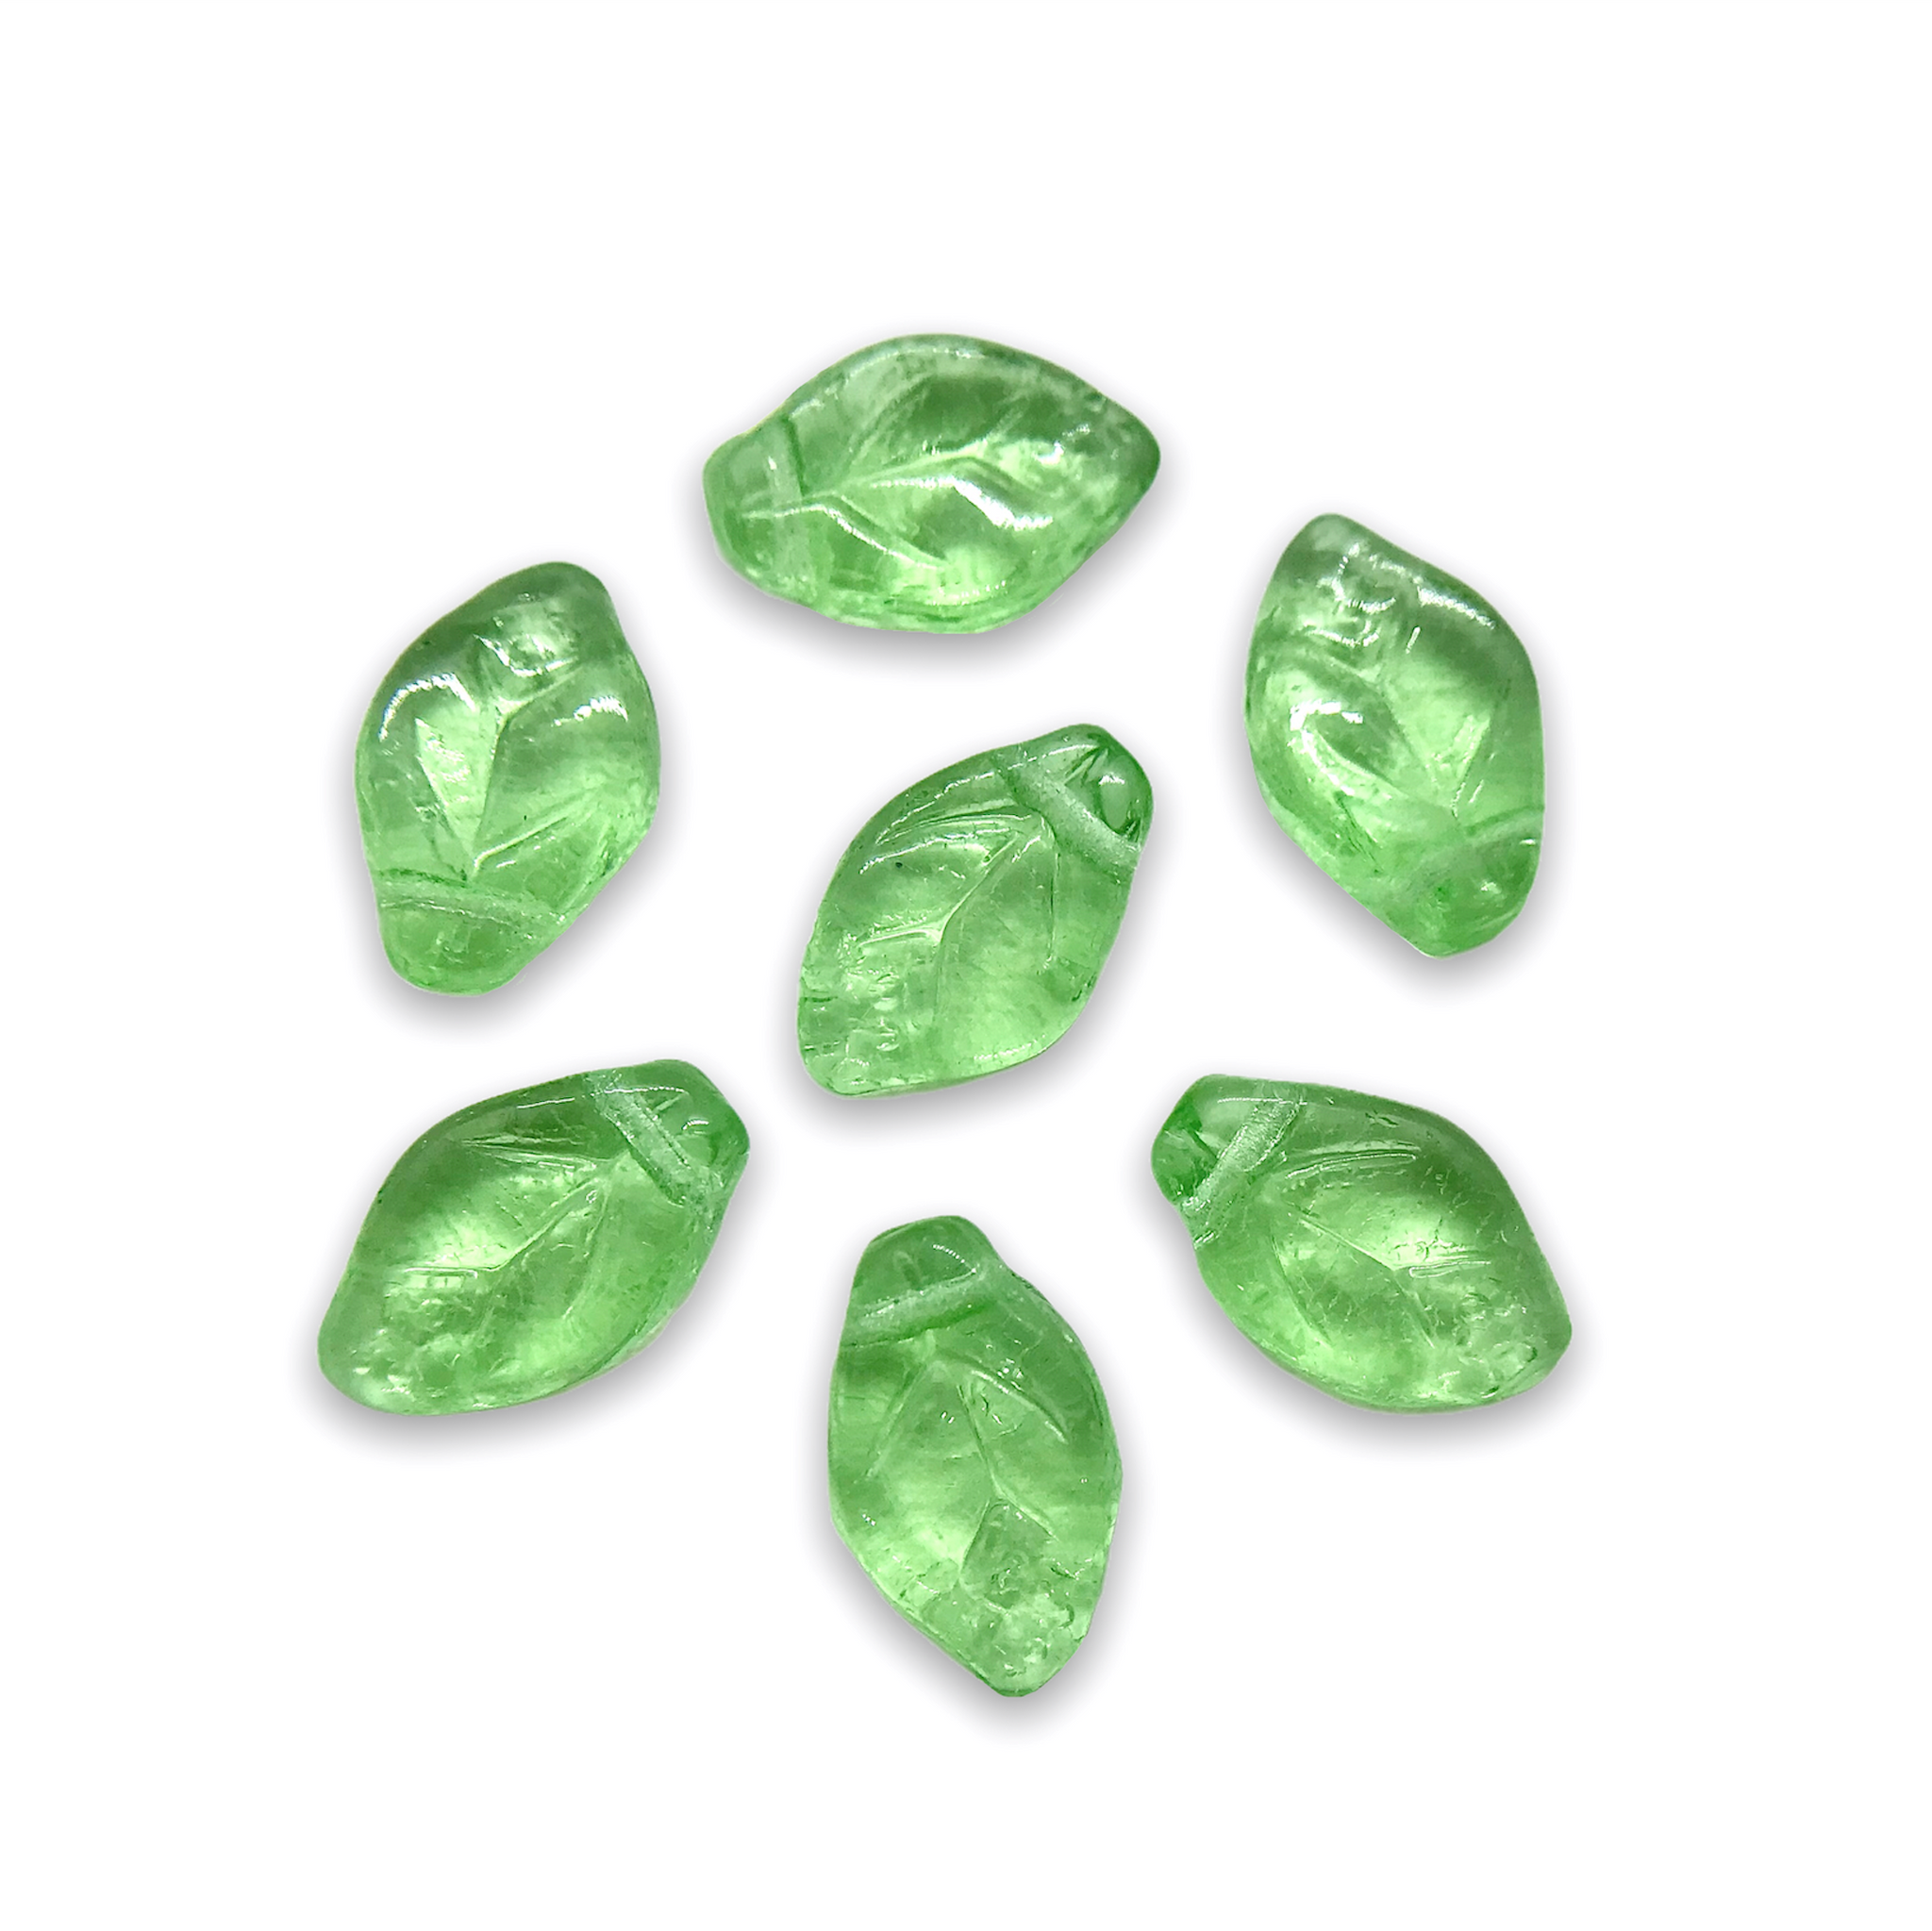 Czech glass leaf beads 25pc translucent light peridot green 12x7mm